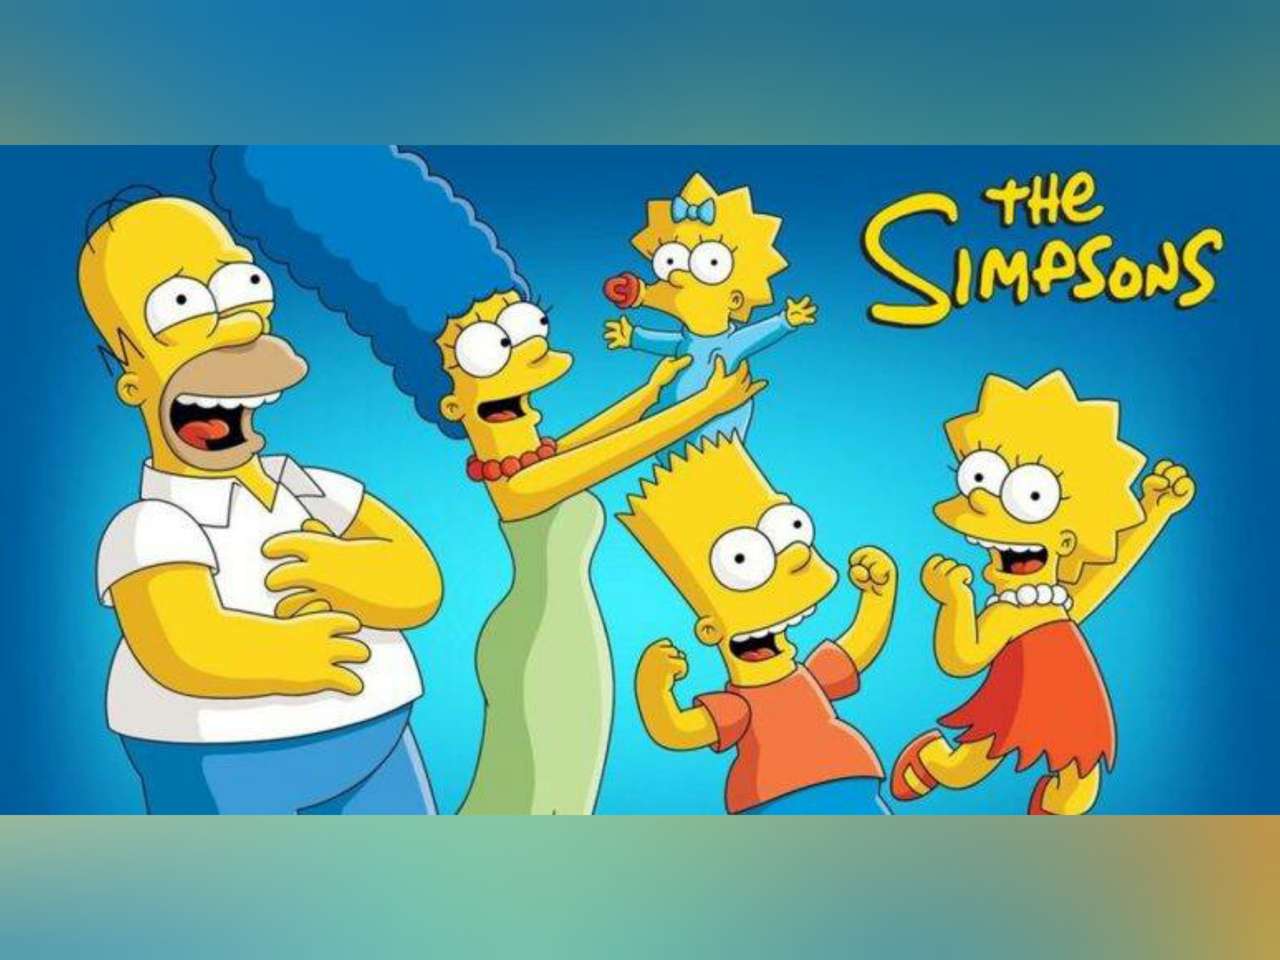 The Simpson puzzle